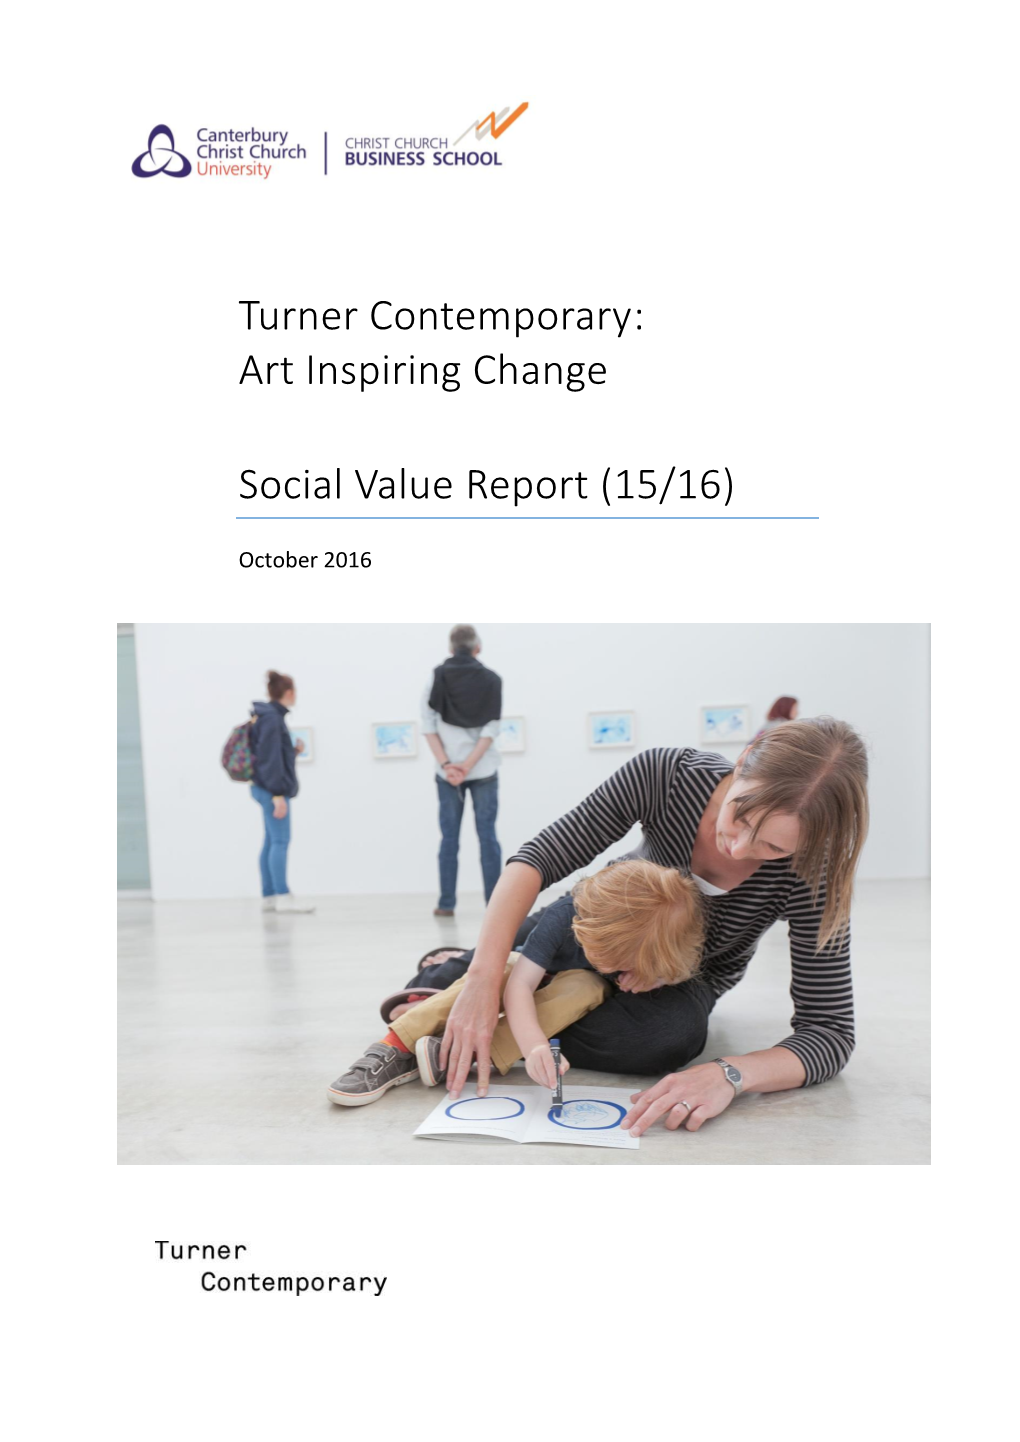 Turner Contemporary: Art Inspiring Change